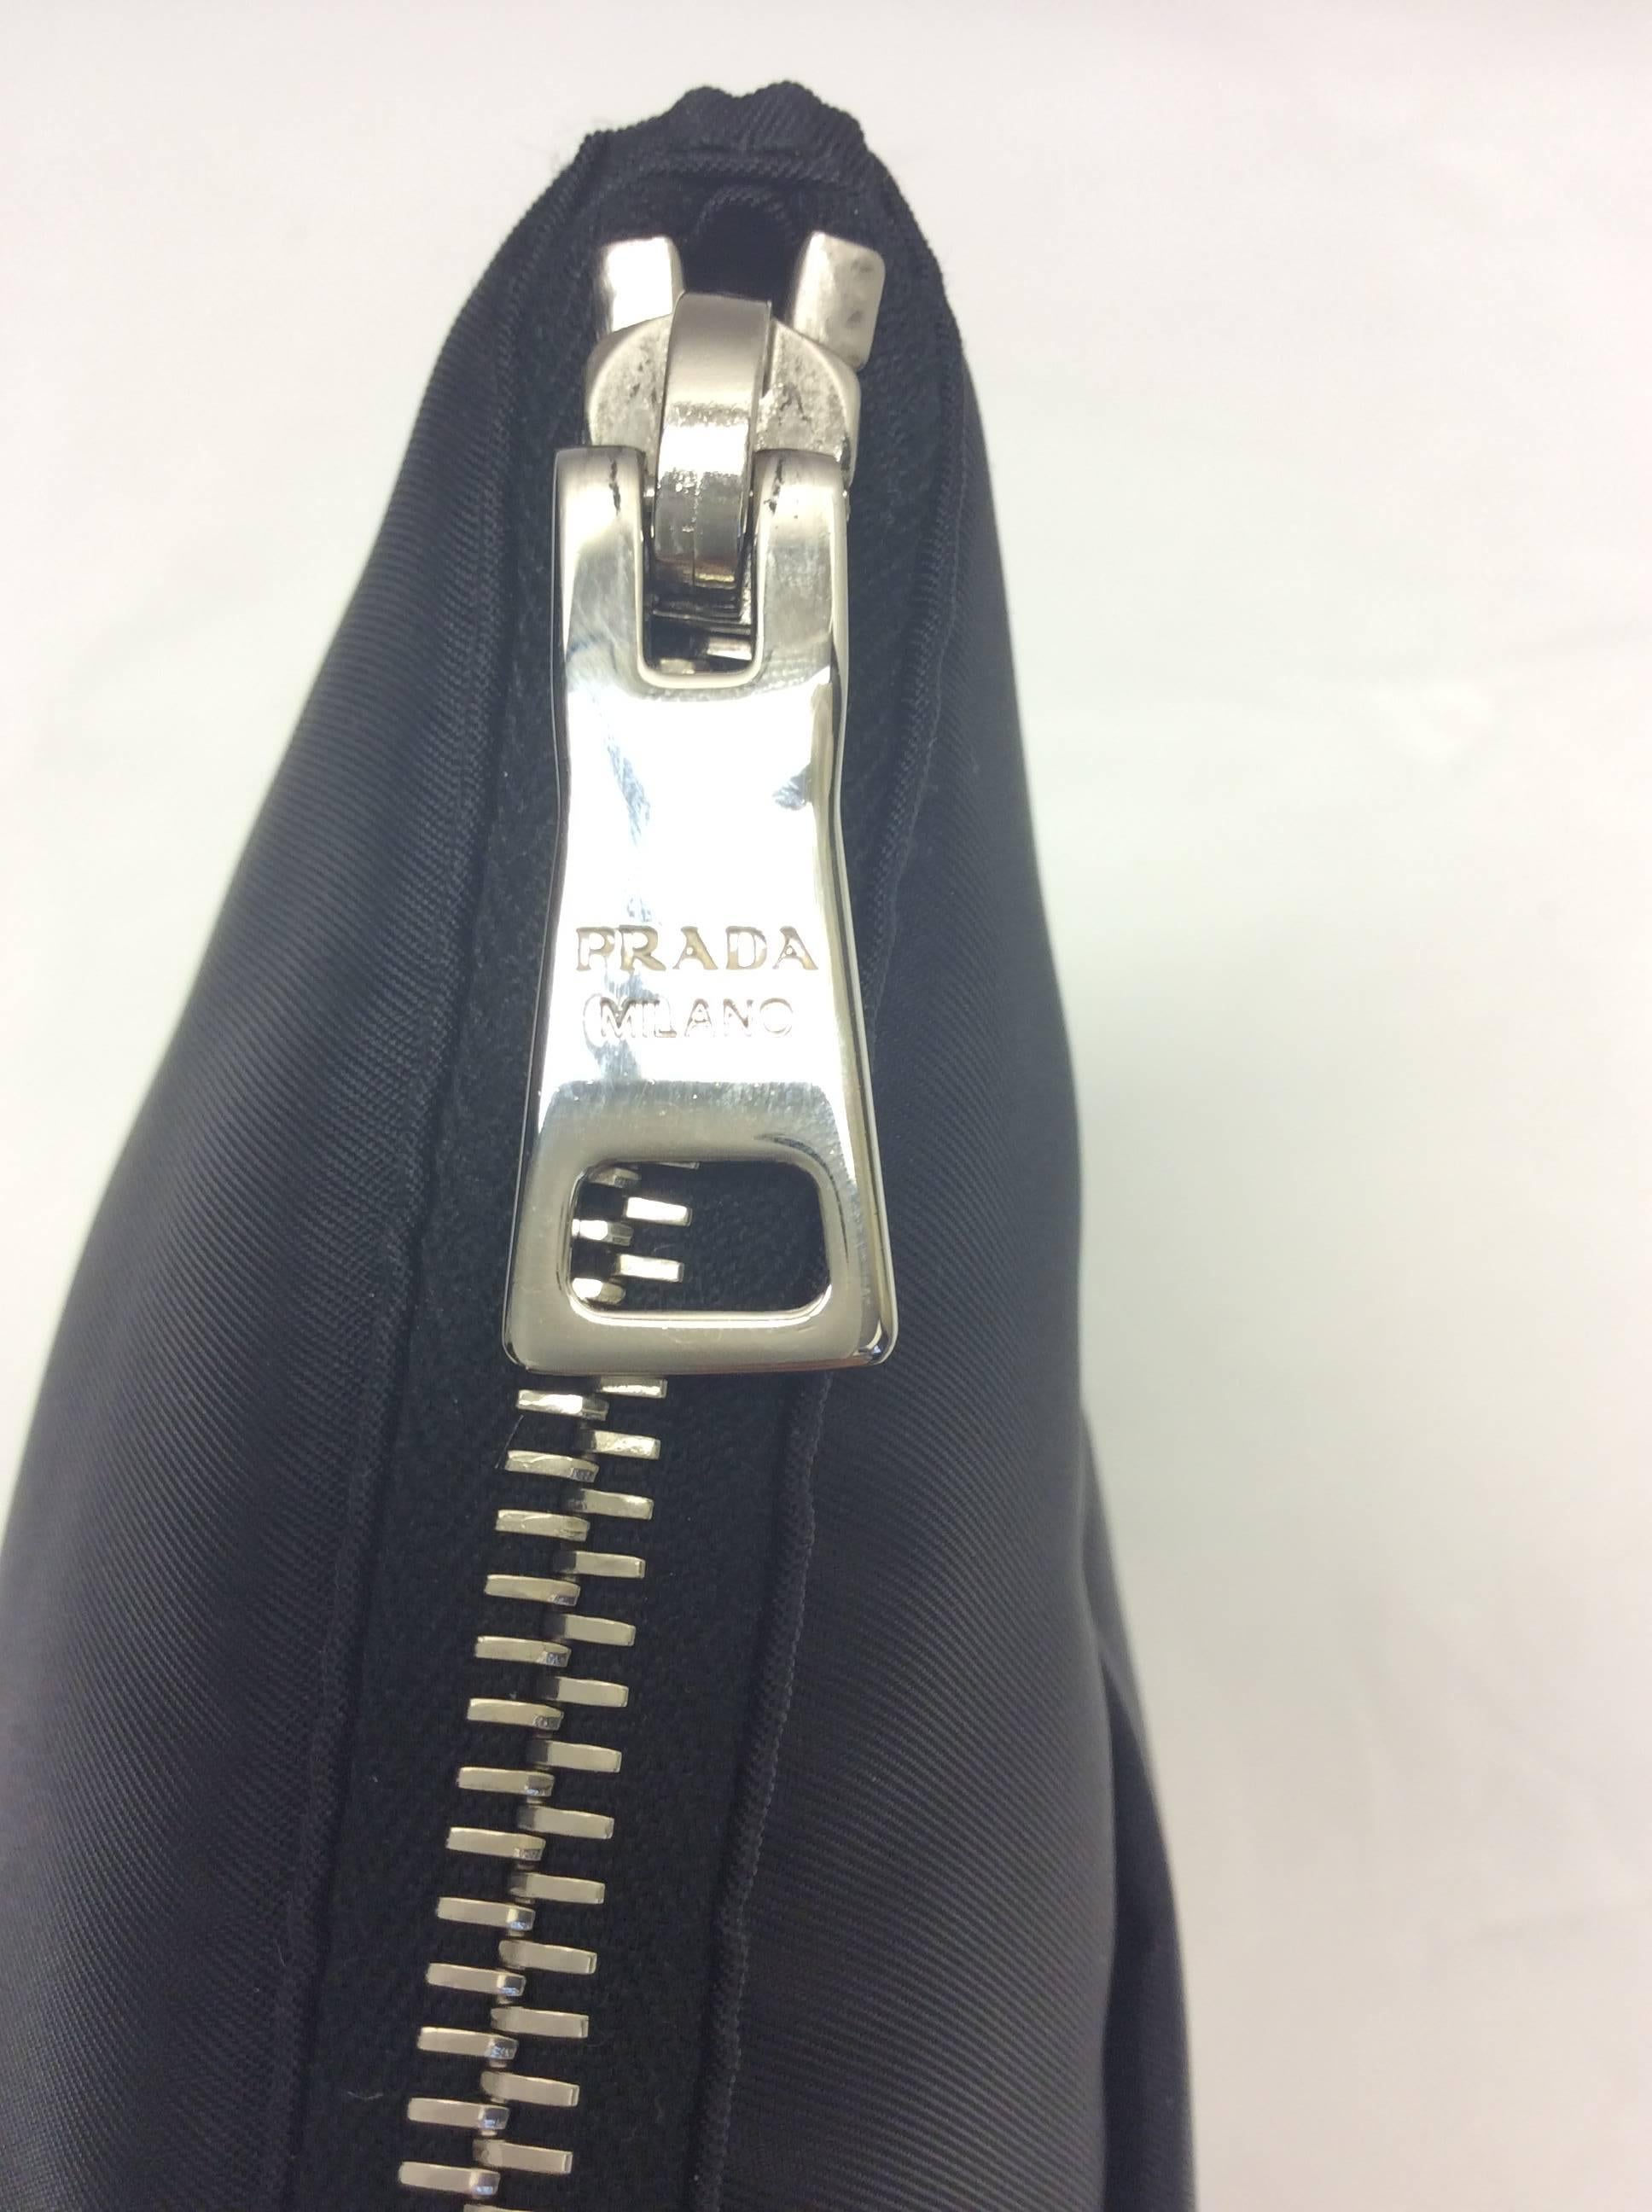 Prada Nylon Black Zipper Clutch
$699
Made in Italy
Silver hardware
Top zipper closure, front zipper pocket